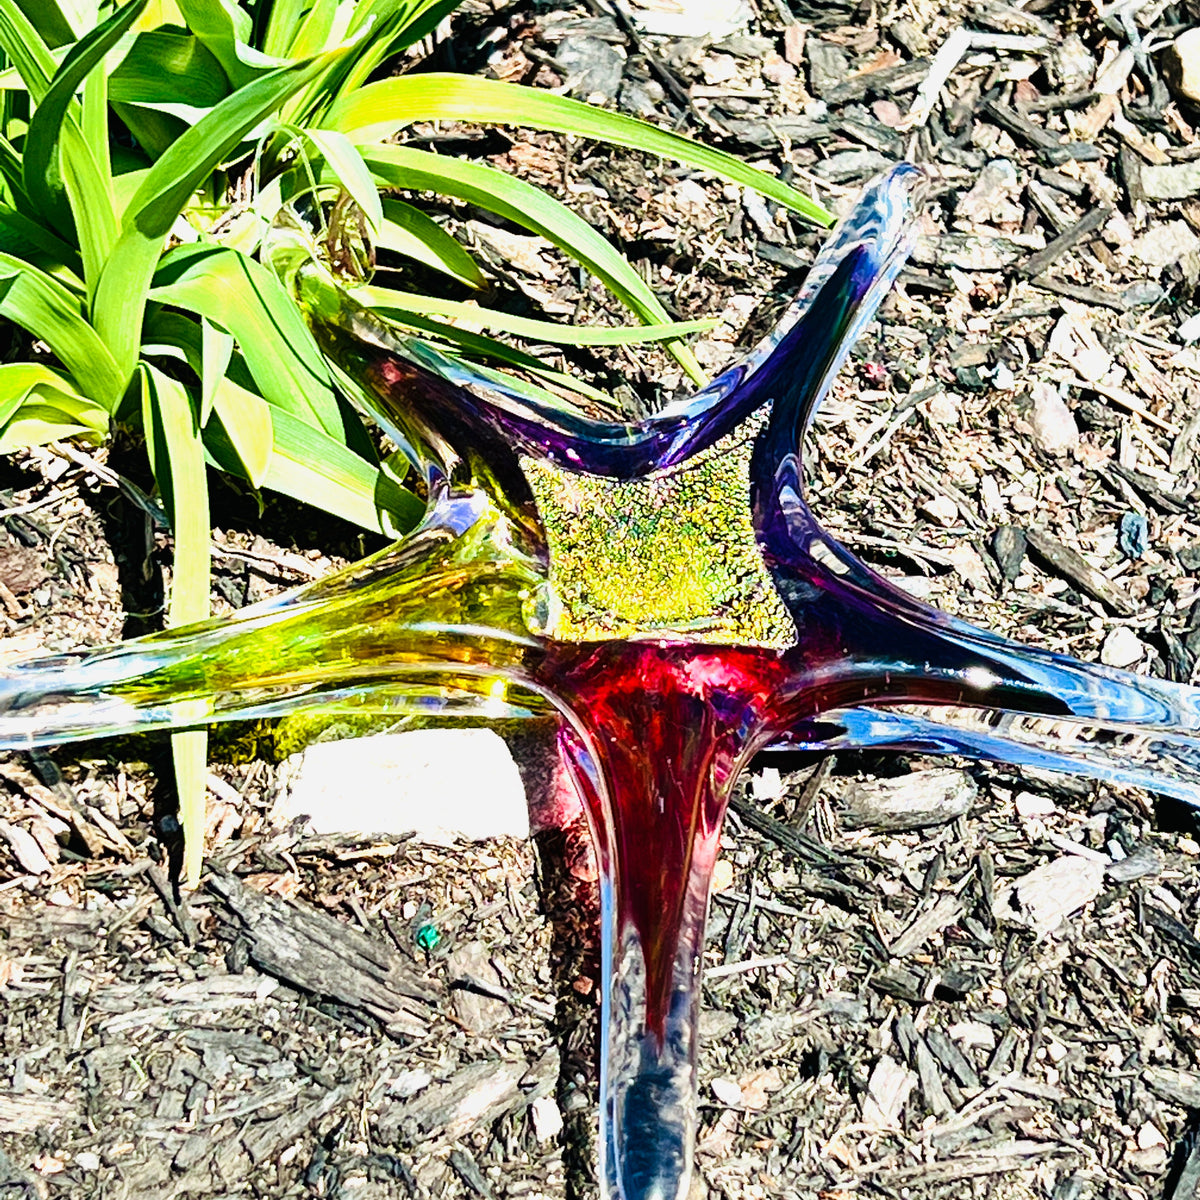 Star Ornament, Bloom Suncatcher Luke Adams Glass Blowing Studio 